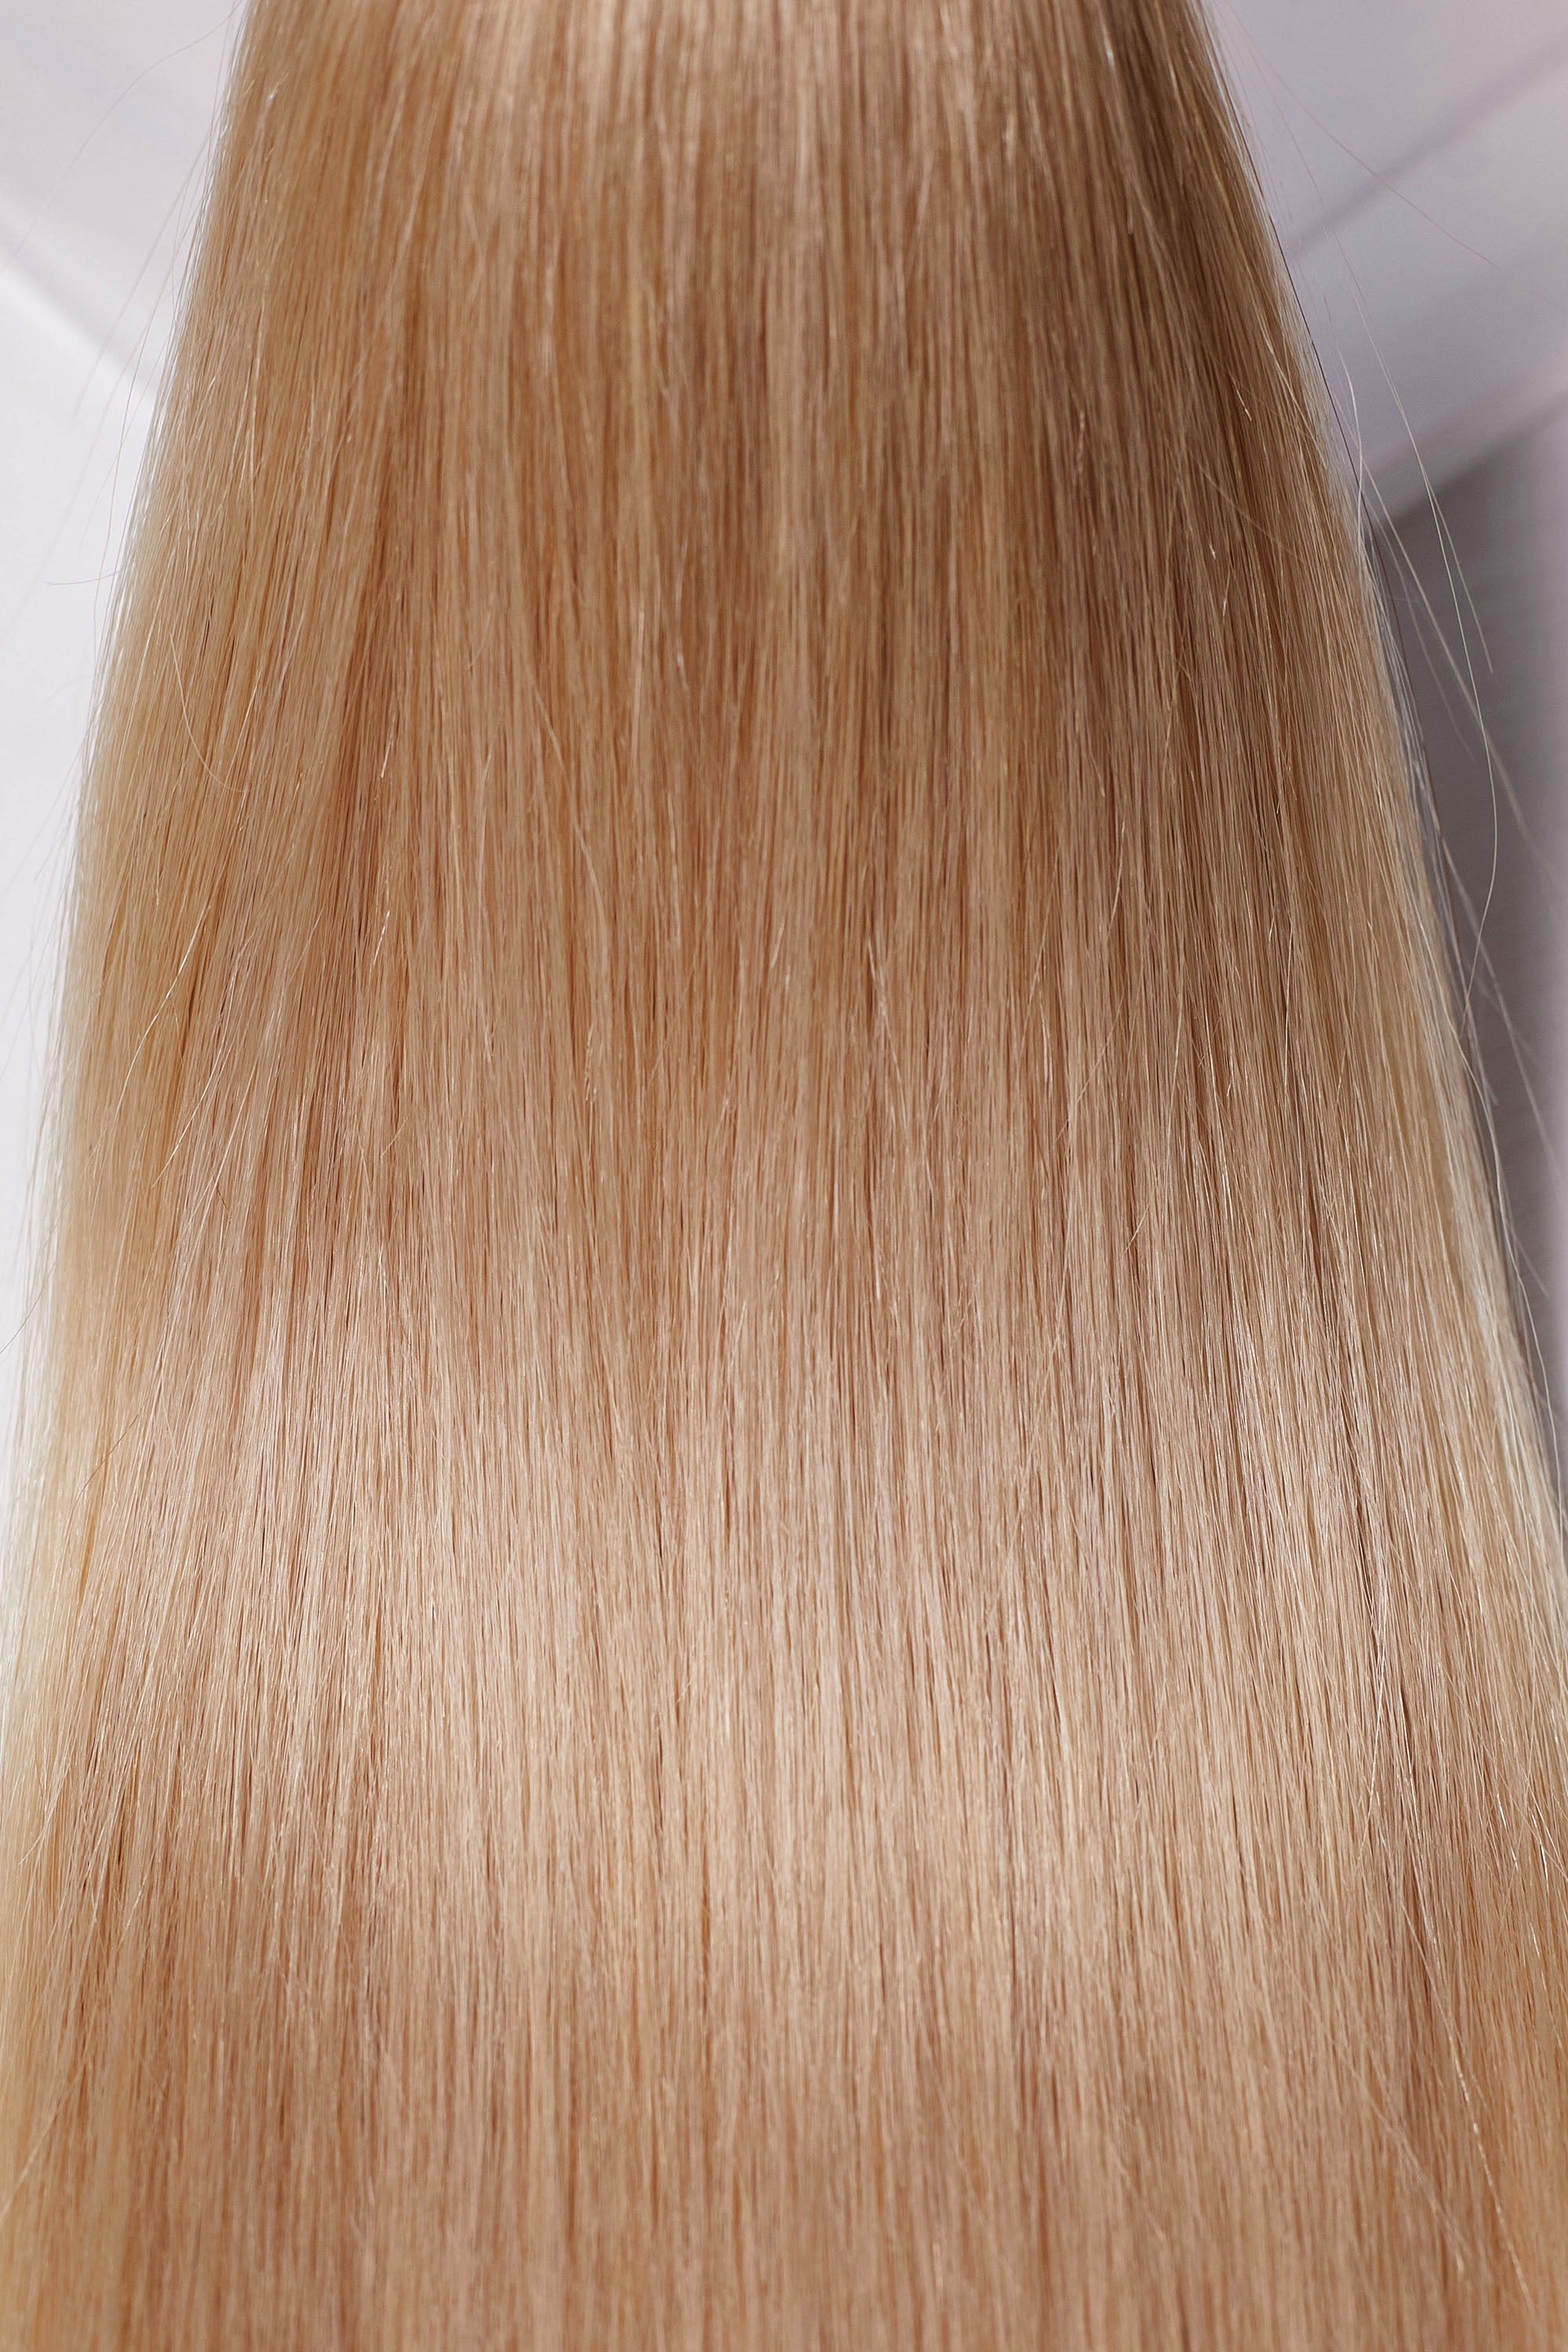 Behair professional Keratin Tip "Premium" 18" (45cm) Natural Straight Light Gold Sand #16 - 25g (Standart - 0.7g each pcs) hair extensions